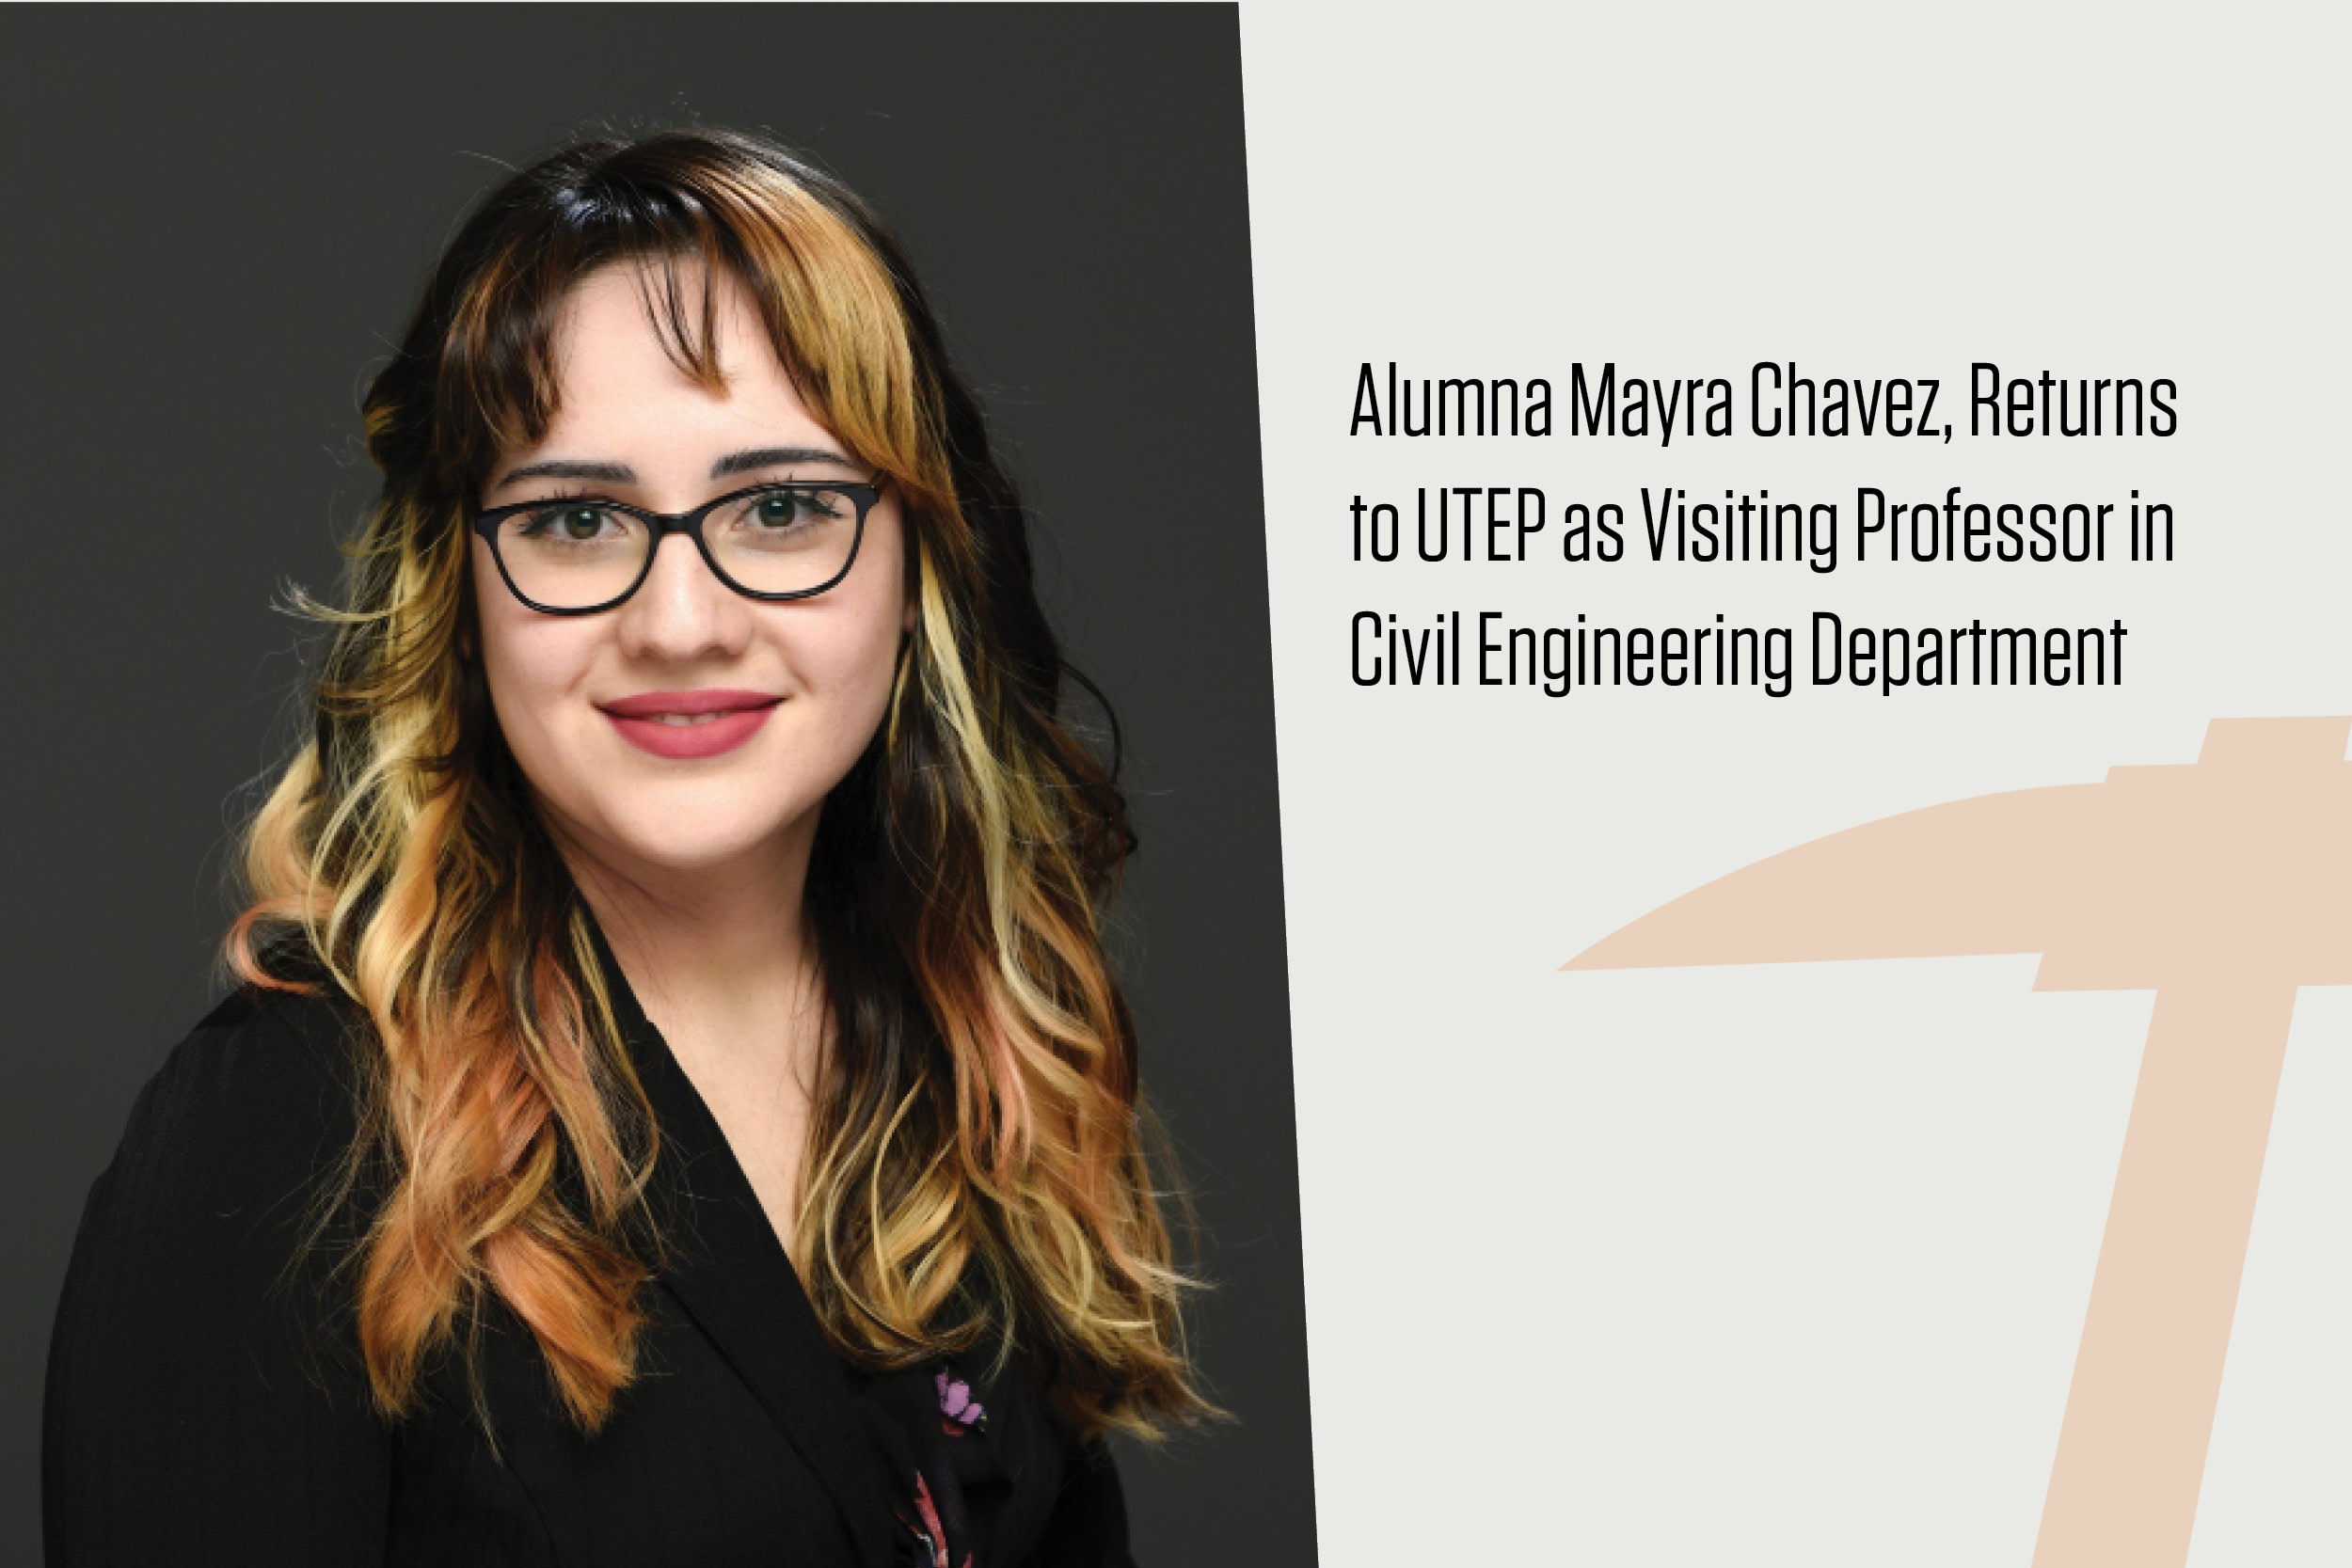 Alumna Mayra Chavez Returns to UTEP as Visiting Professor in Civil Engineering Department